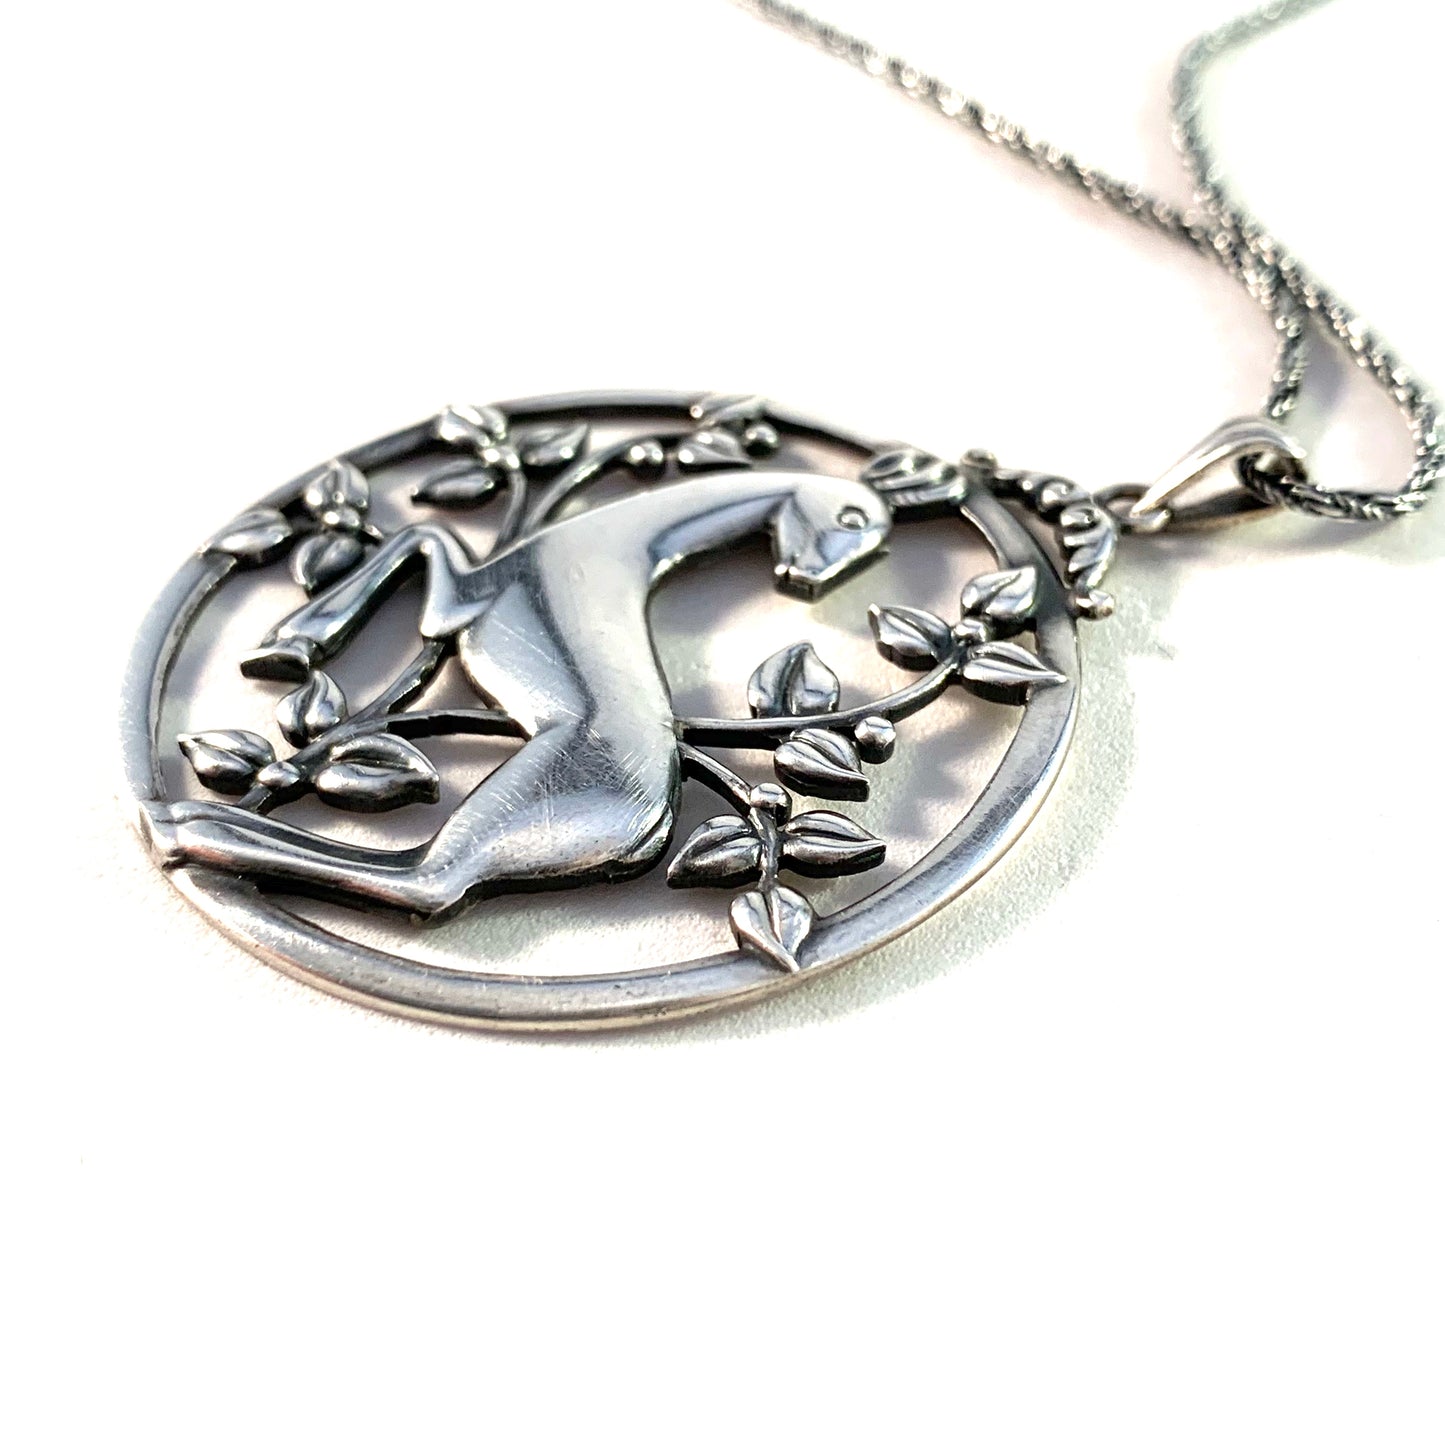 G Dahlgren, Sweden 1947 Sterling Silver Pendant Necklace.